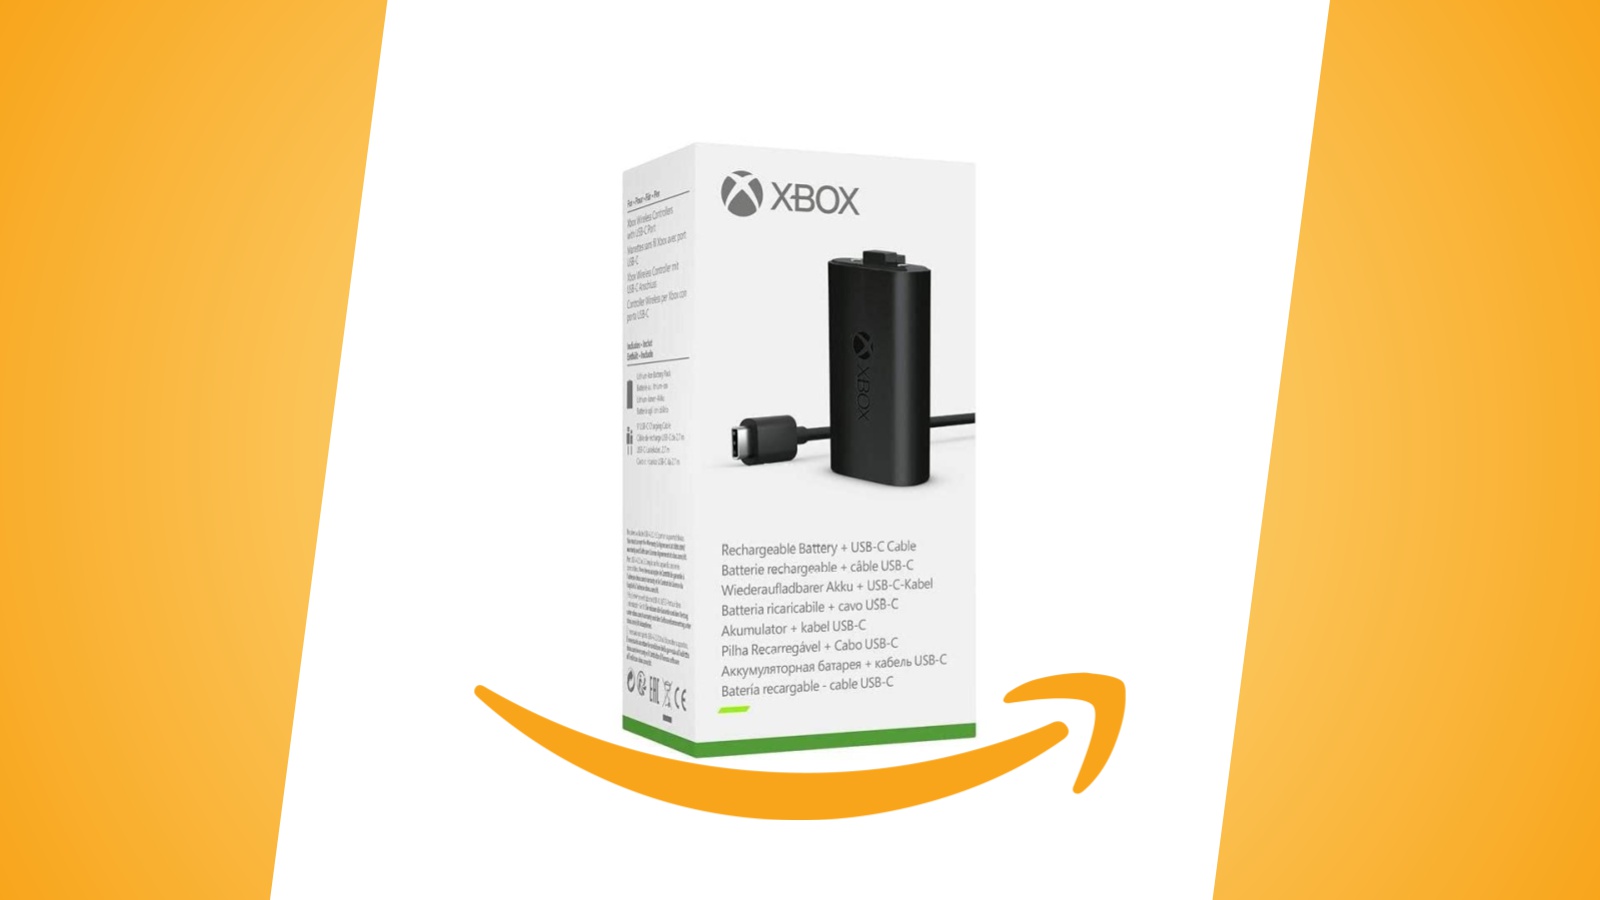 Offerte Amazon: Xbox Kit Play and Charge è ora in sconto al prezzo minimo storico